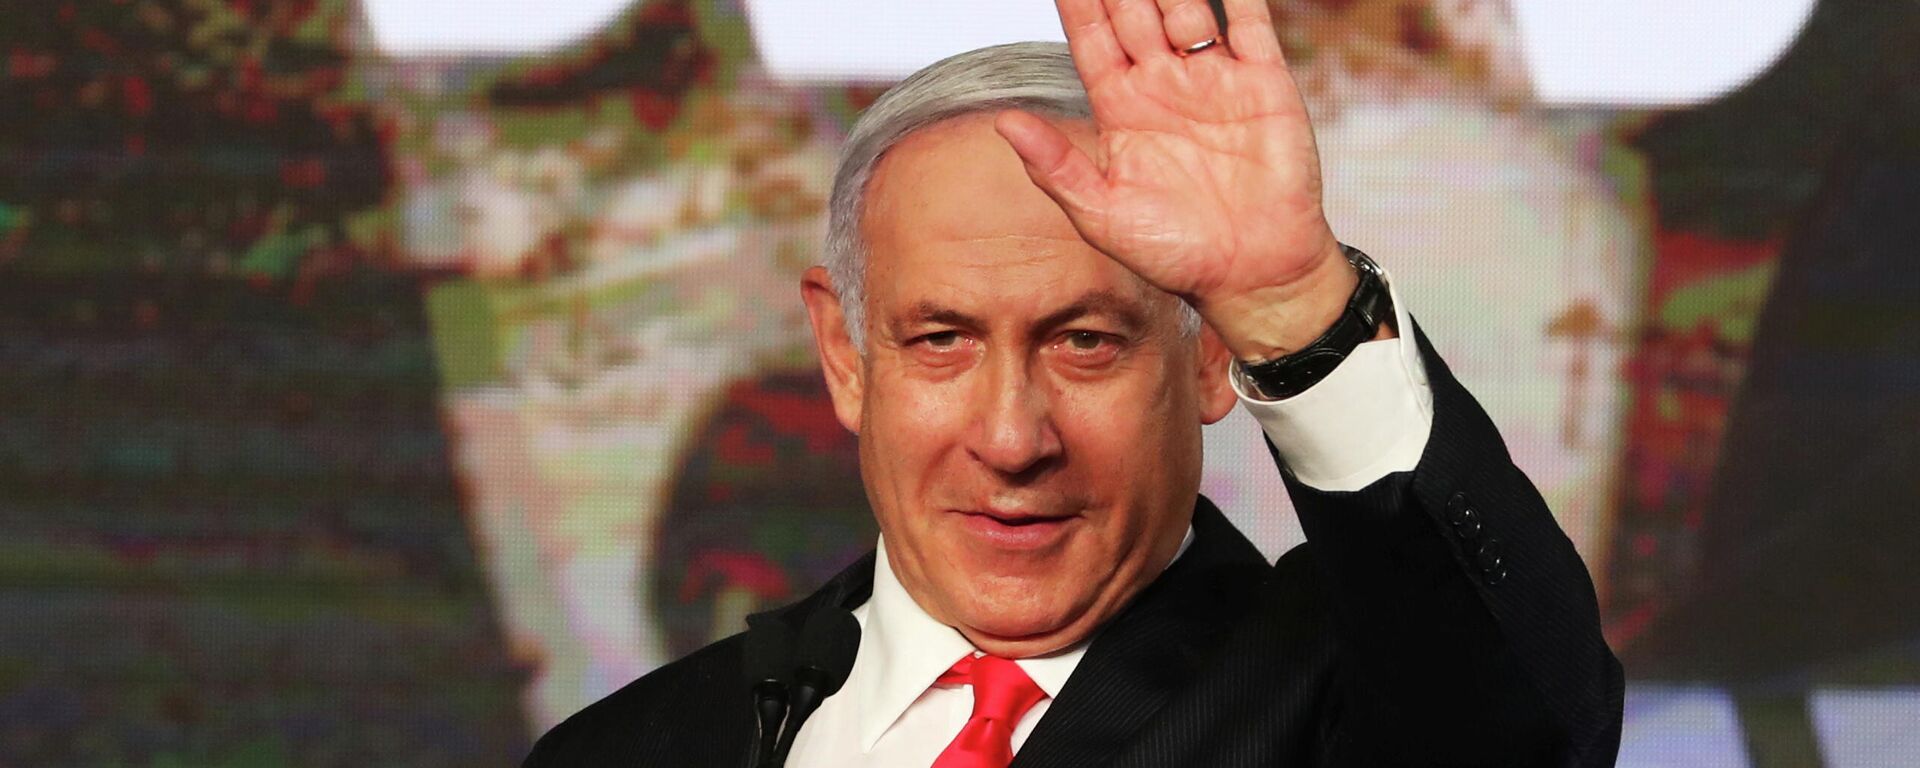 Benjamín Netanyahu, primer ministro israelí - Sputnik Mundo, 1920, 25.03.2021